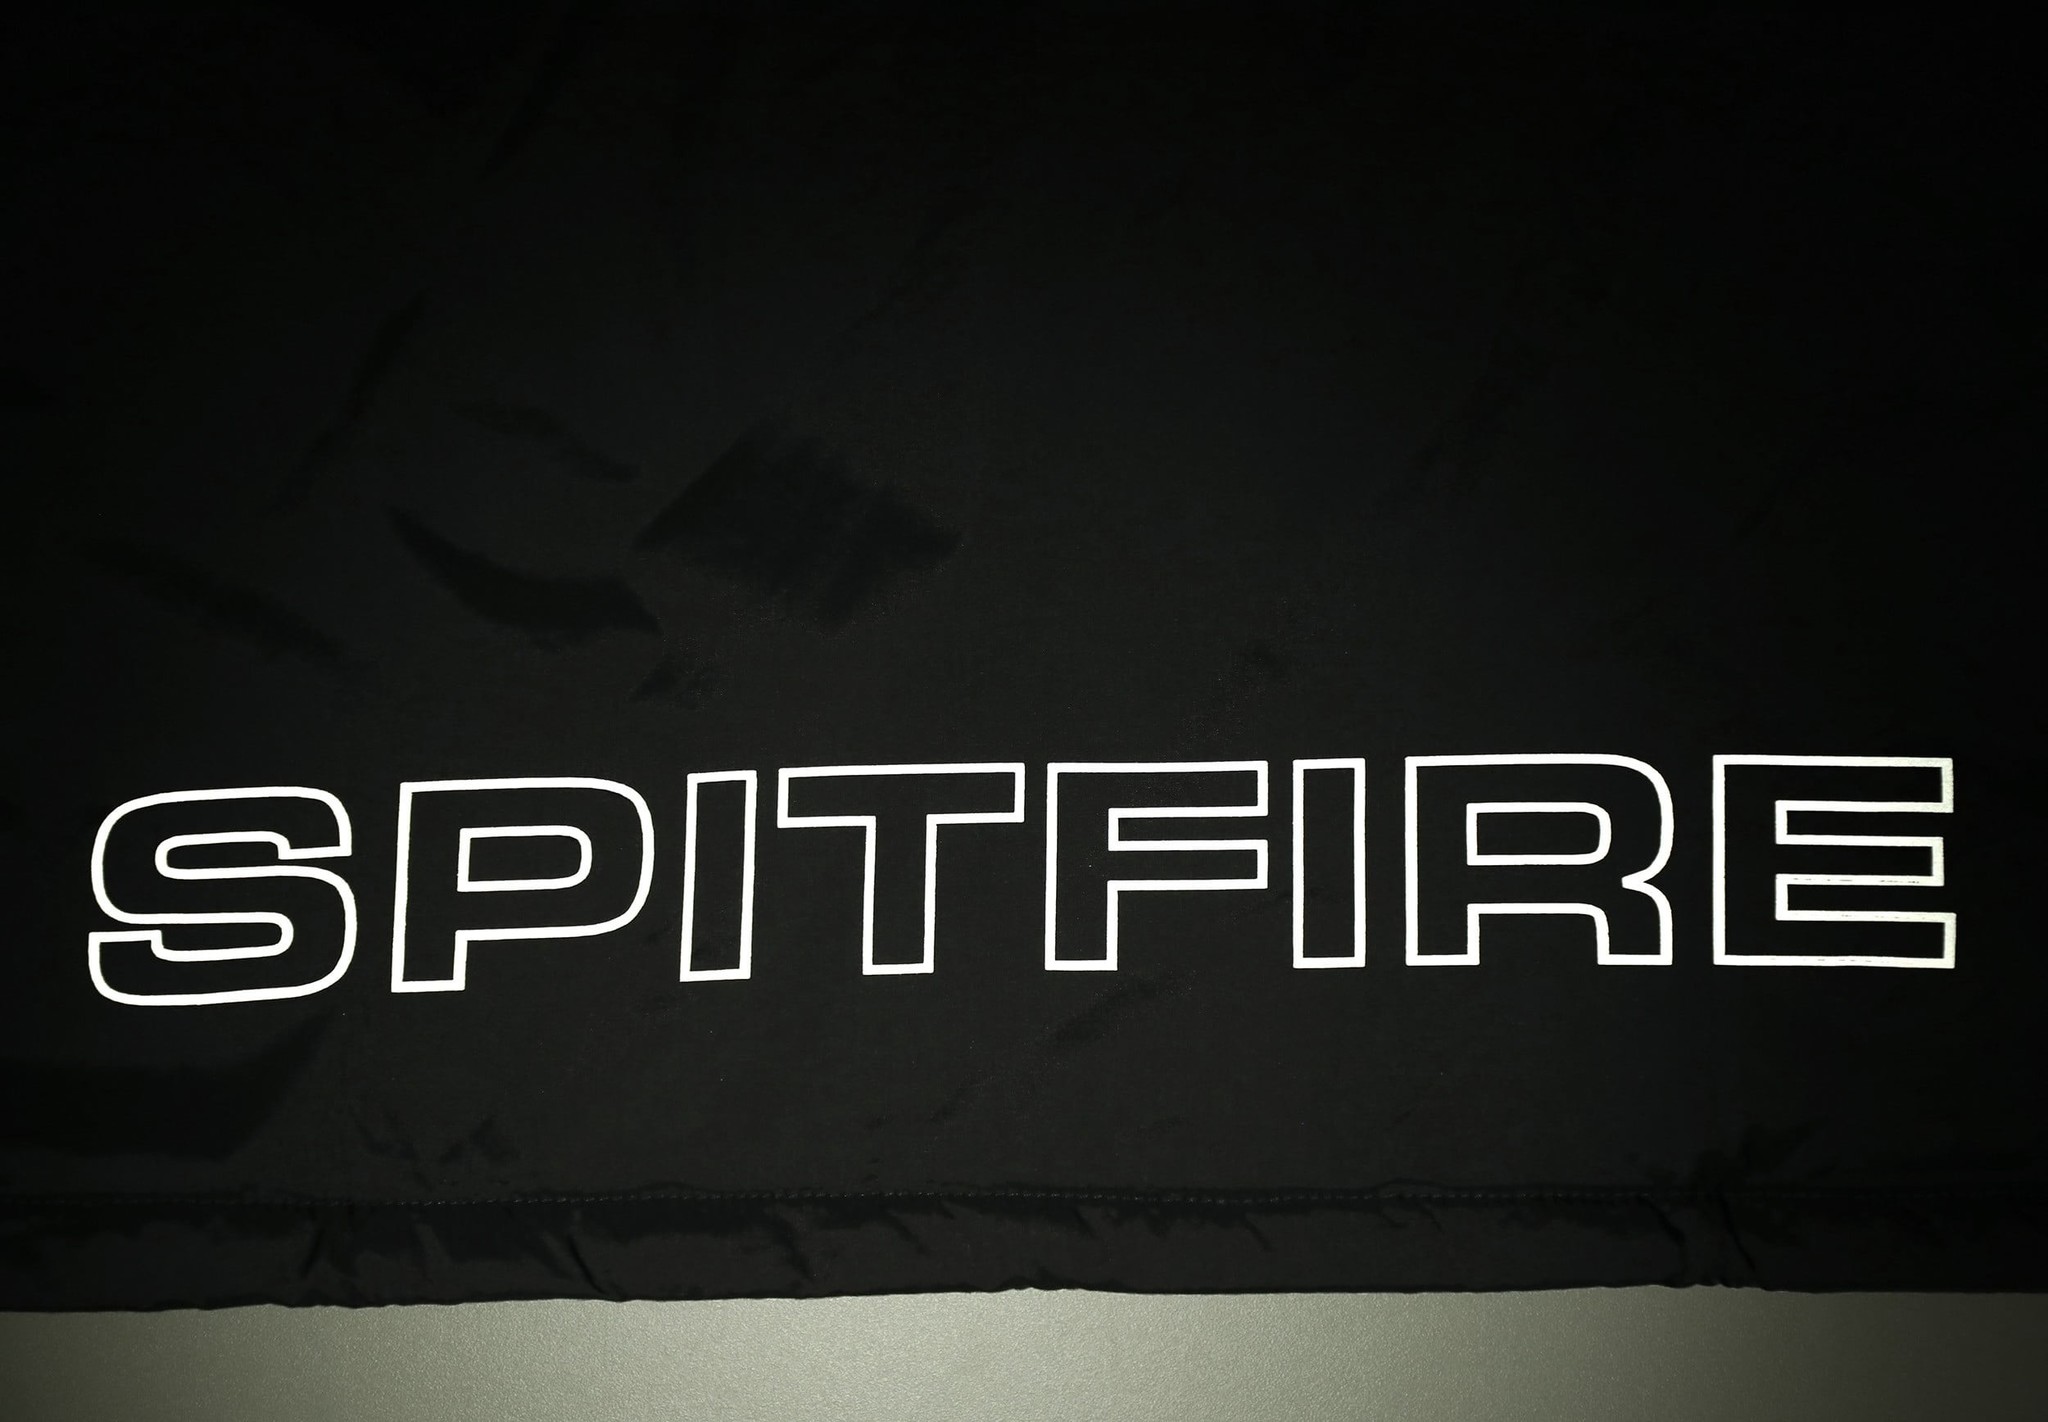 spitfire classic 87 jacket